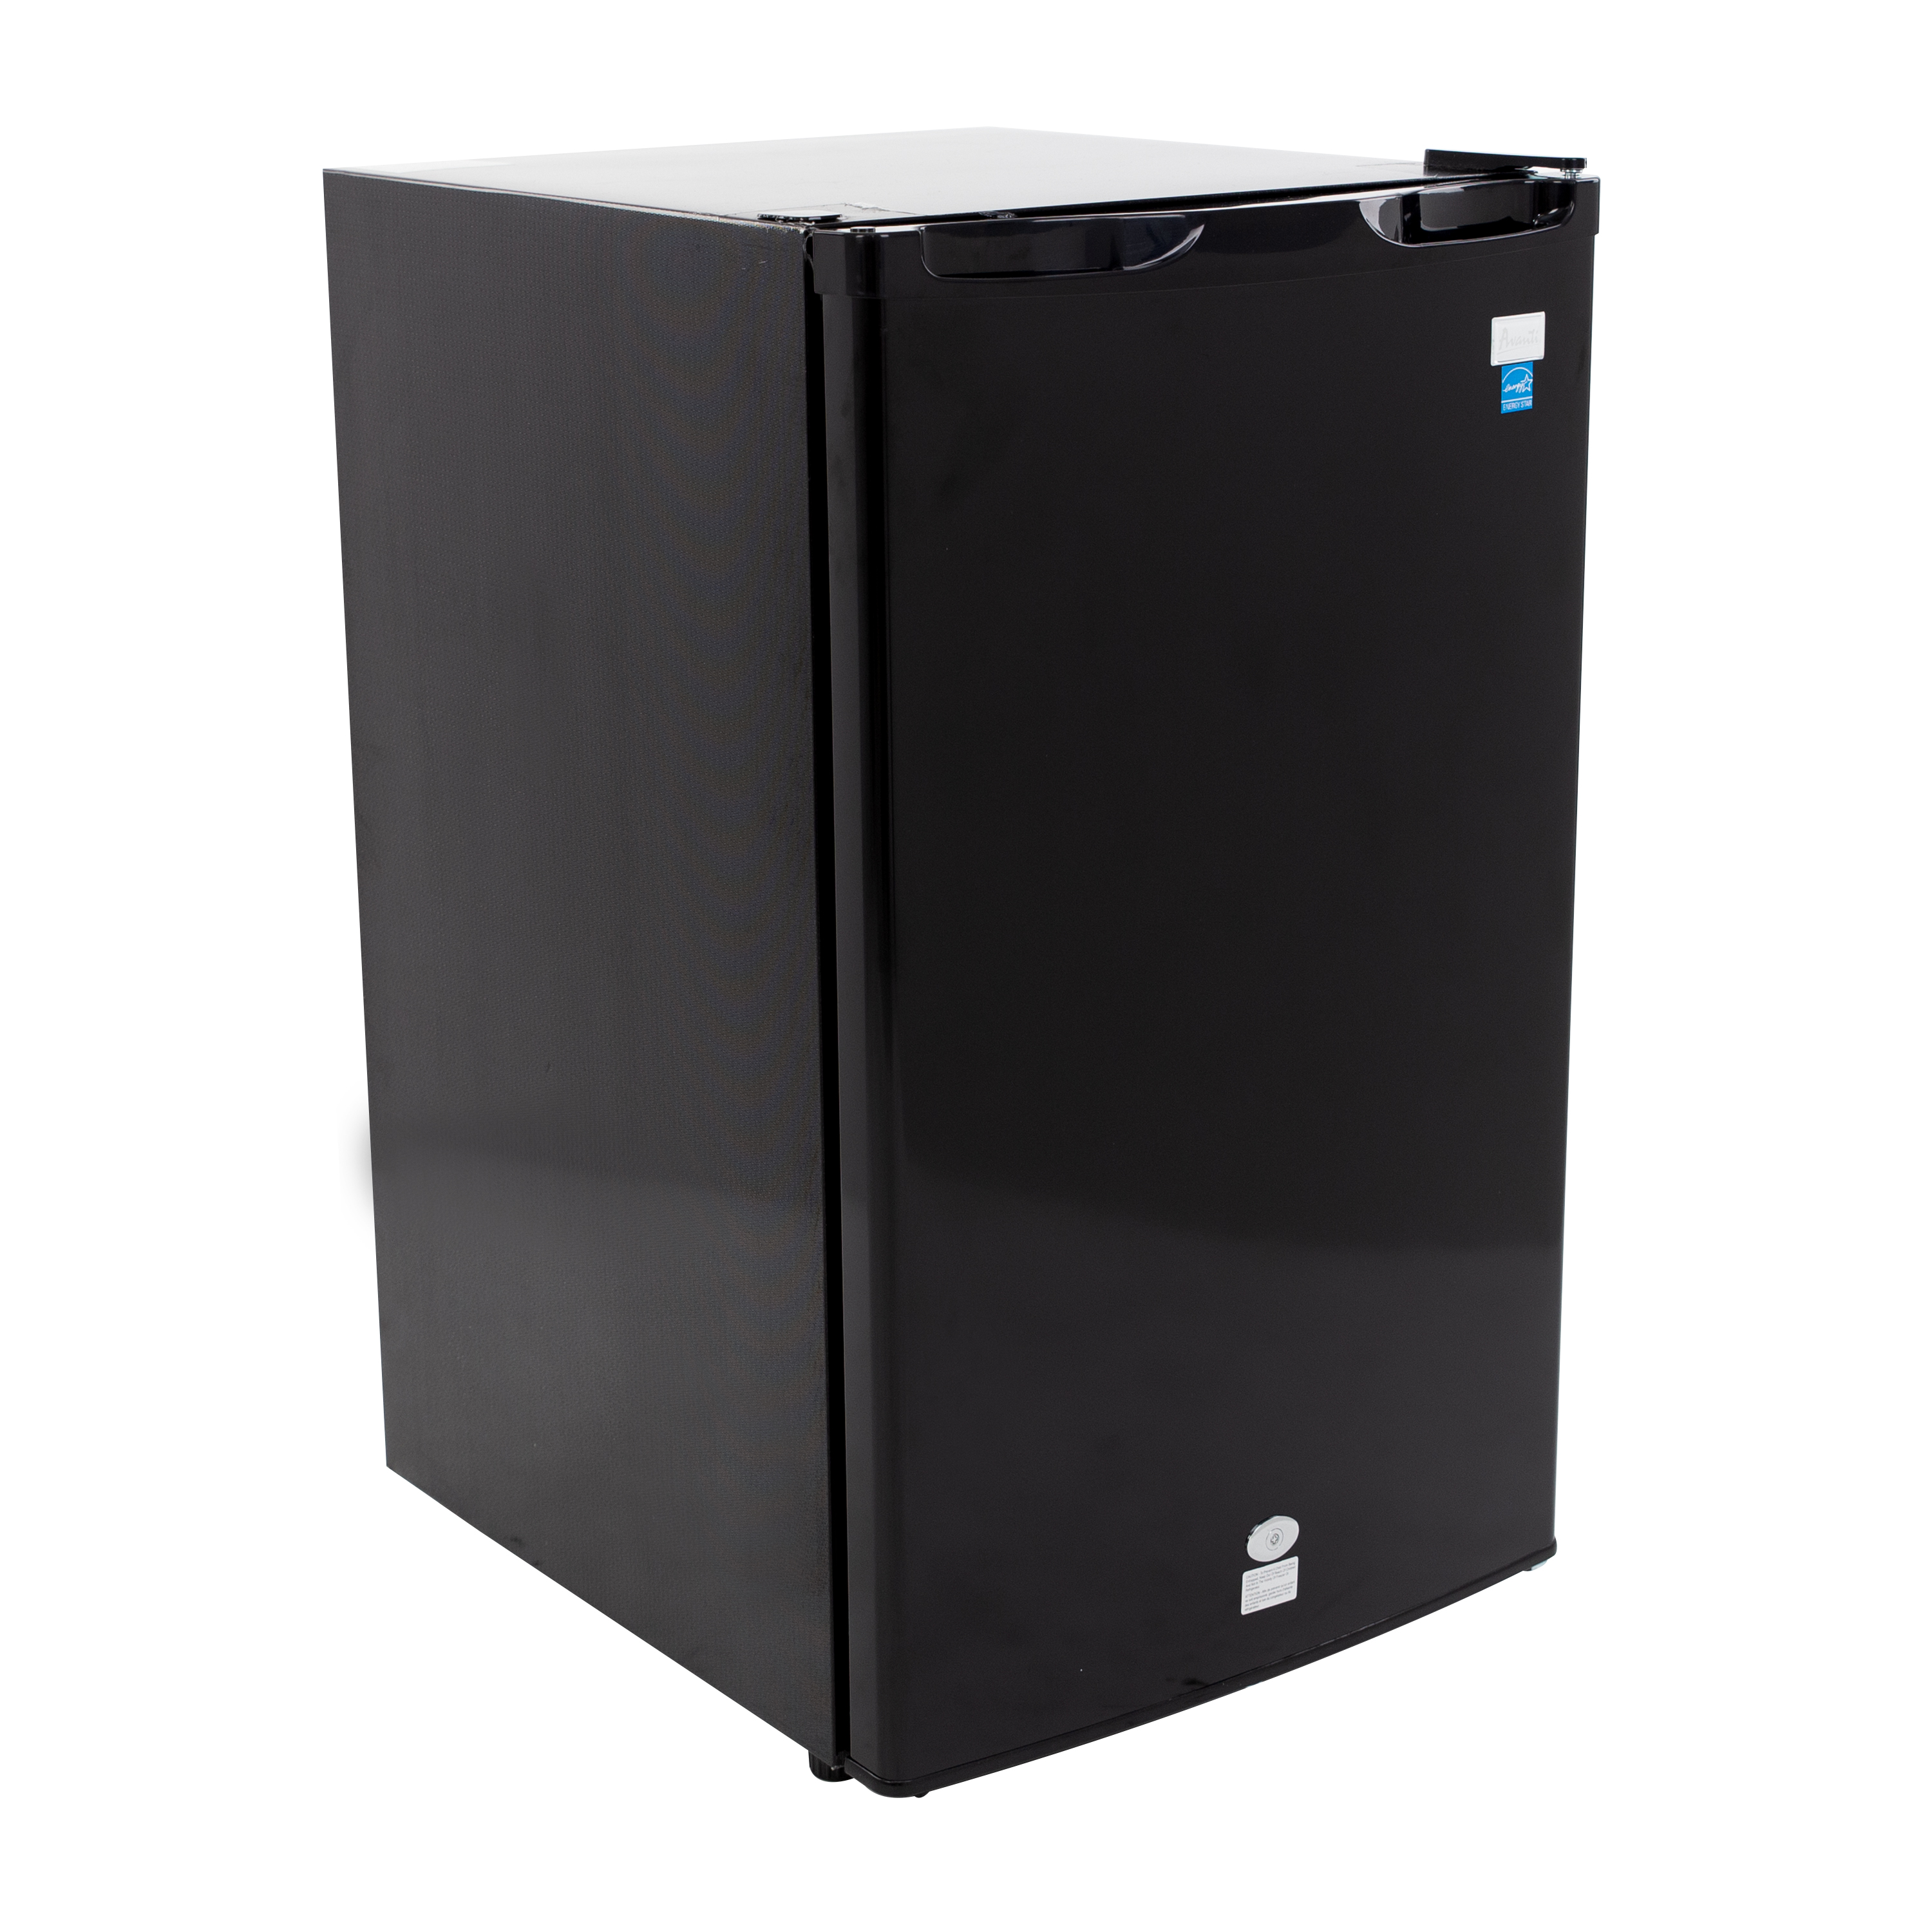 Avanti 4.4 cu. ft. Compact Refrigerator, in Black (AR4446B) - image 1 of 9